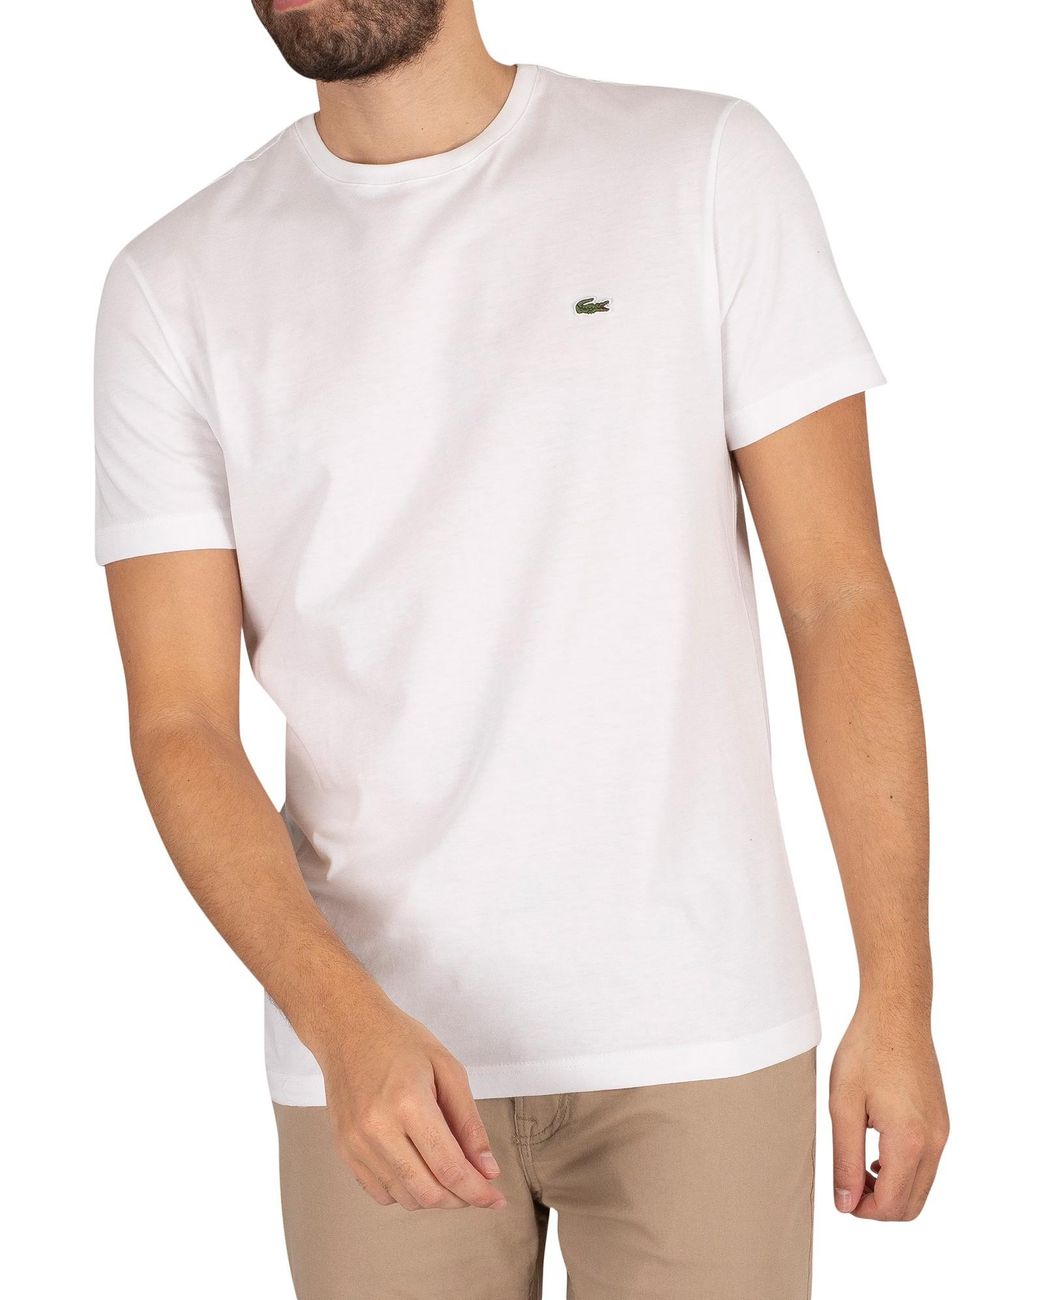 Lacoste Mens Short Sleeve Croc Animation Jersey T-Shirt 